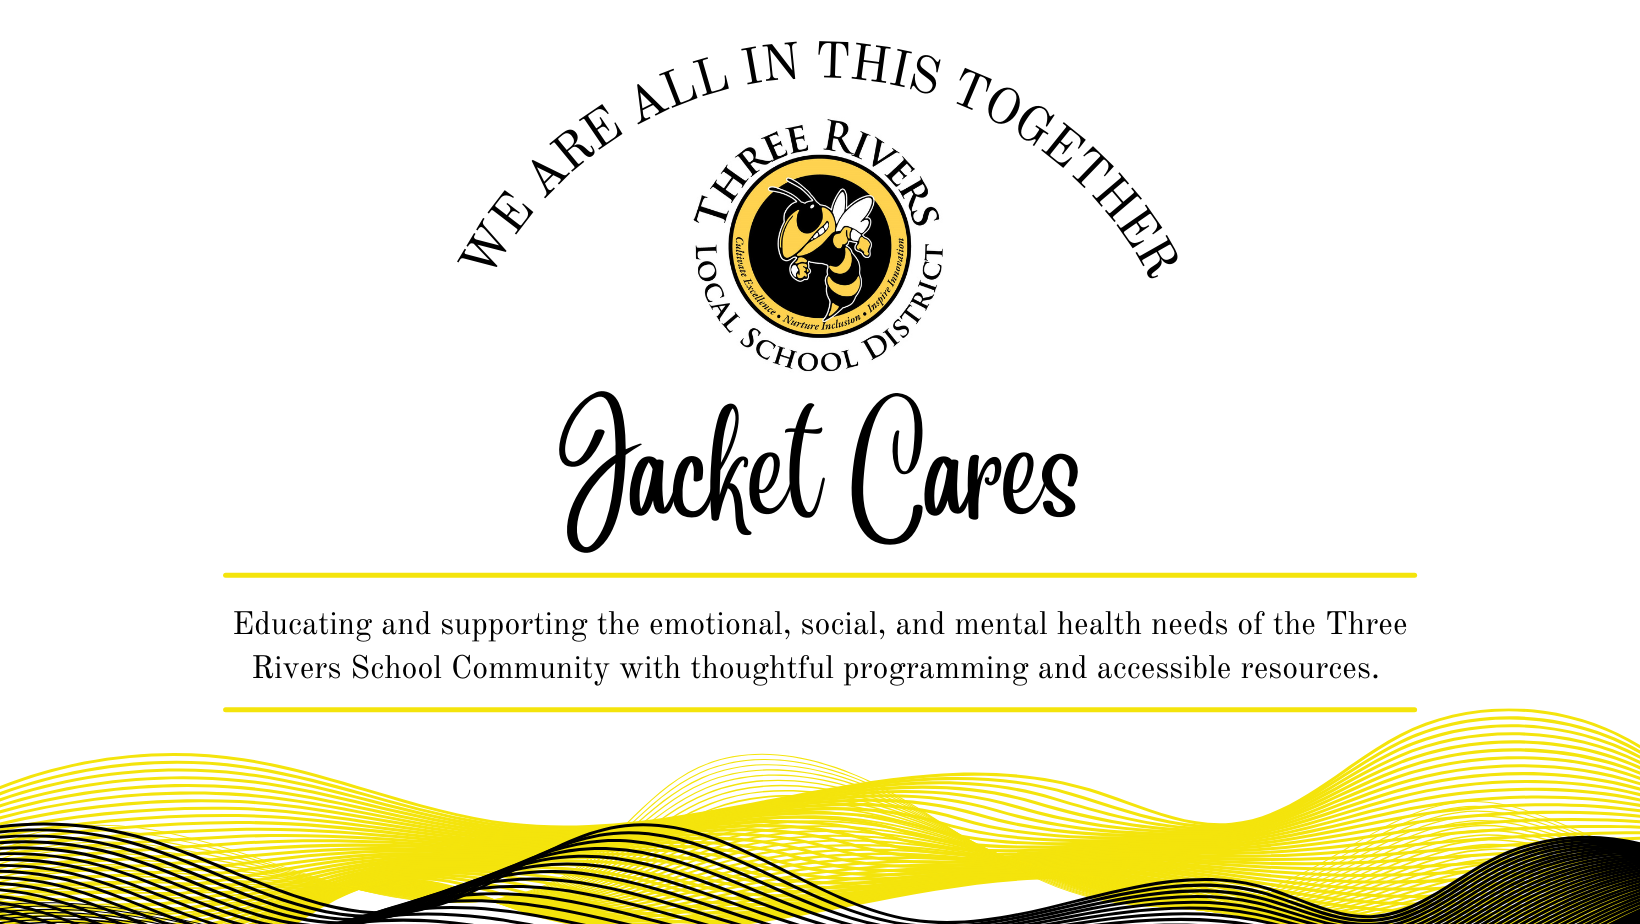 Jacket Cares Initiative